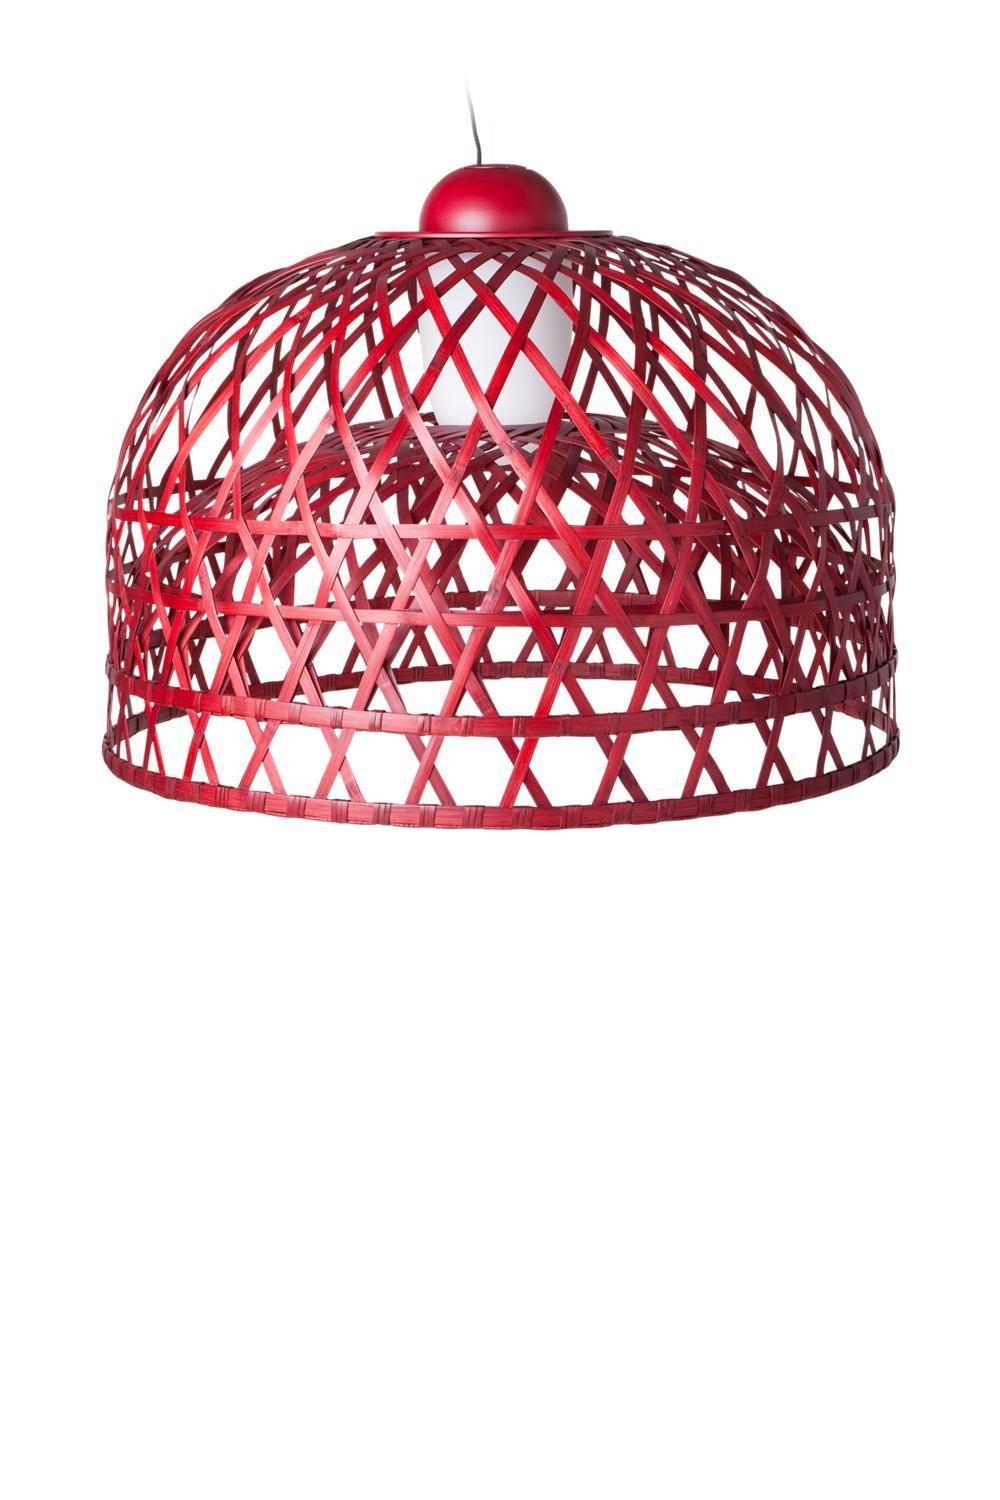 Promotion Items Bird Woven Lamp Shade Hanging Lamp Pendant Light